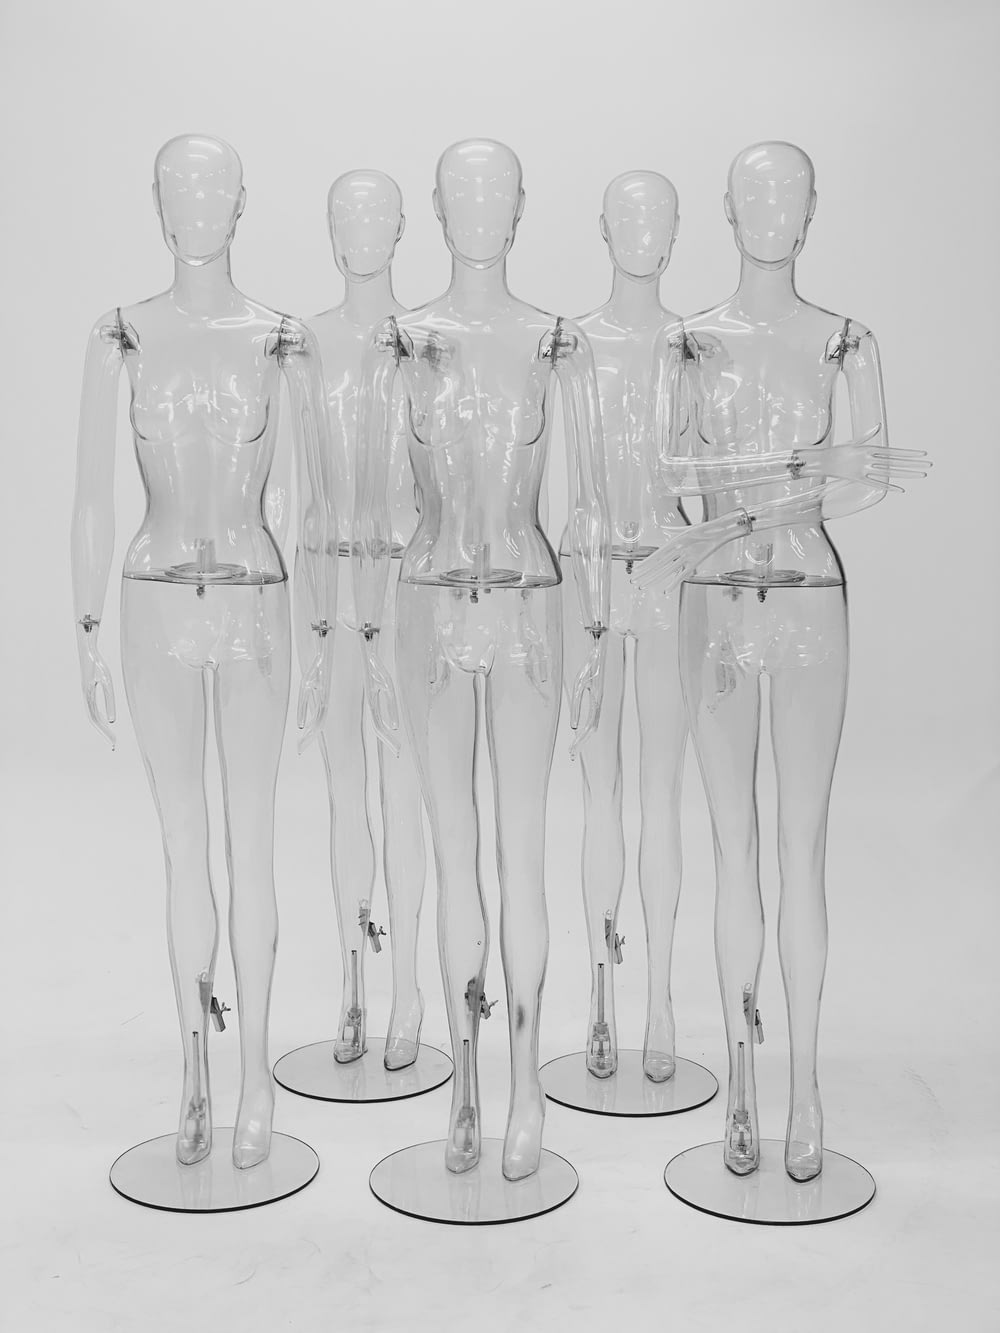 Botellas de vidrio transparente sobre superficie blanca